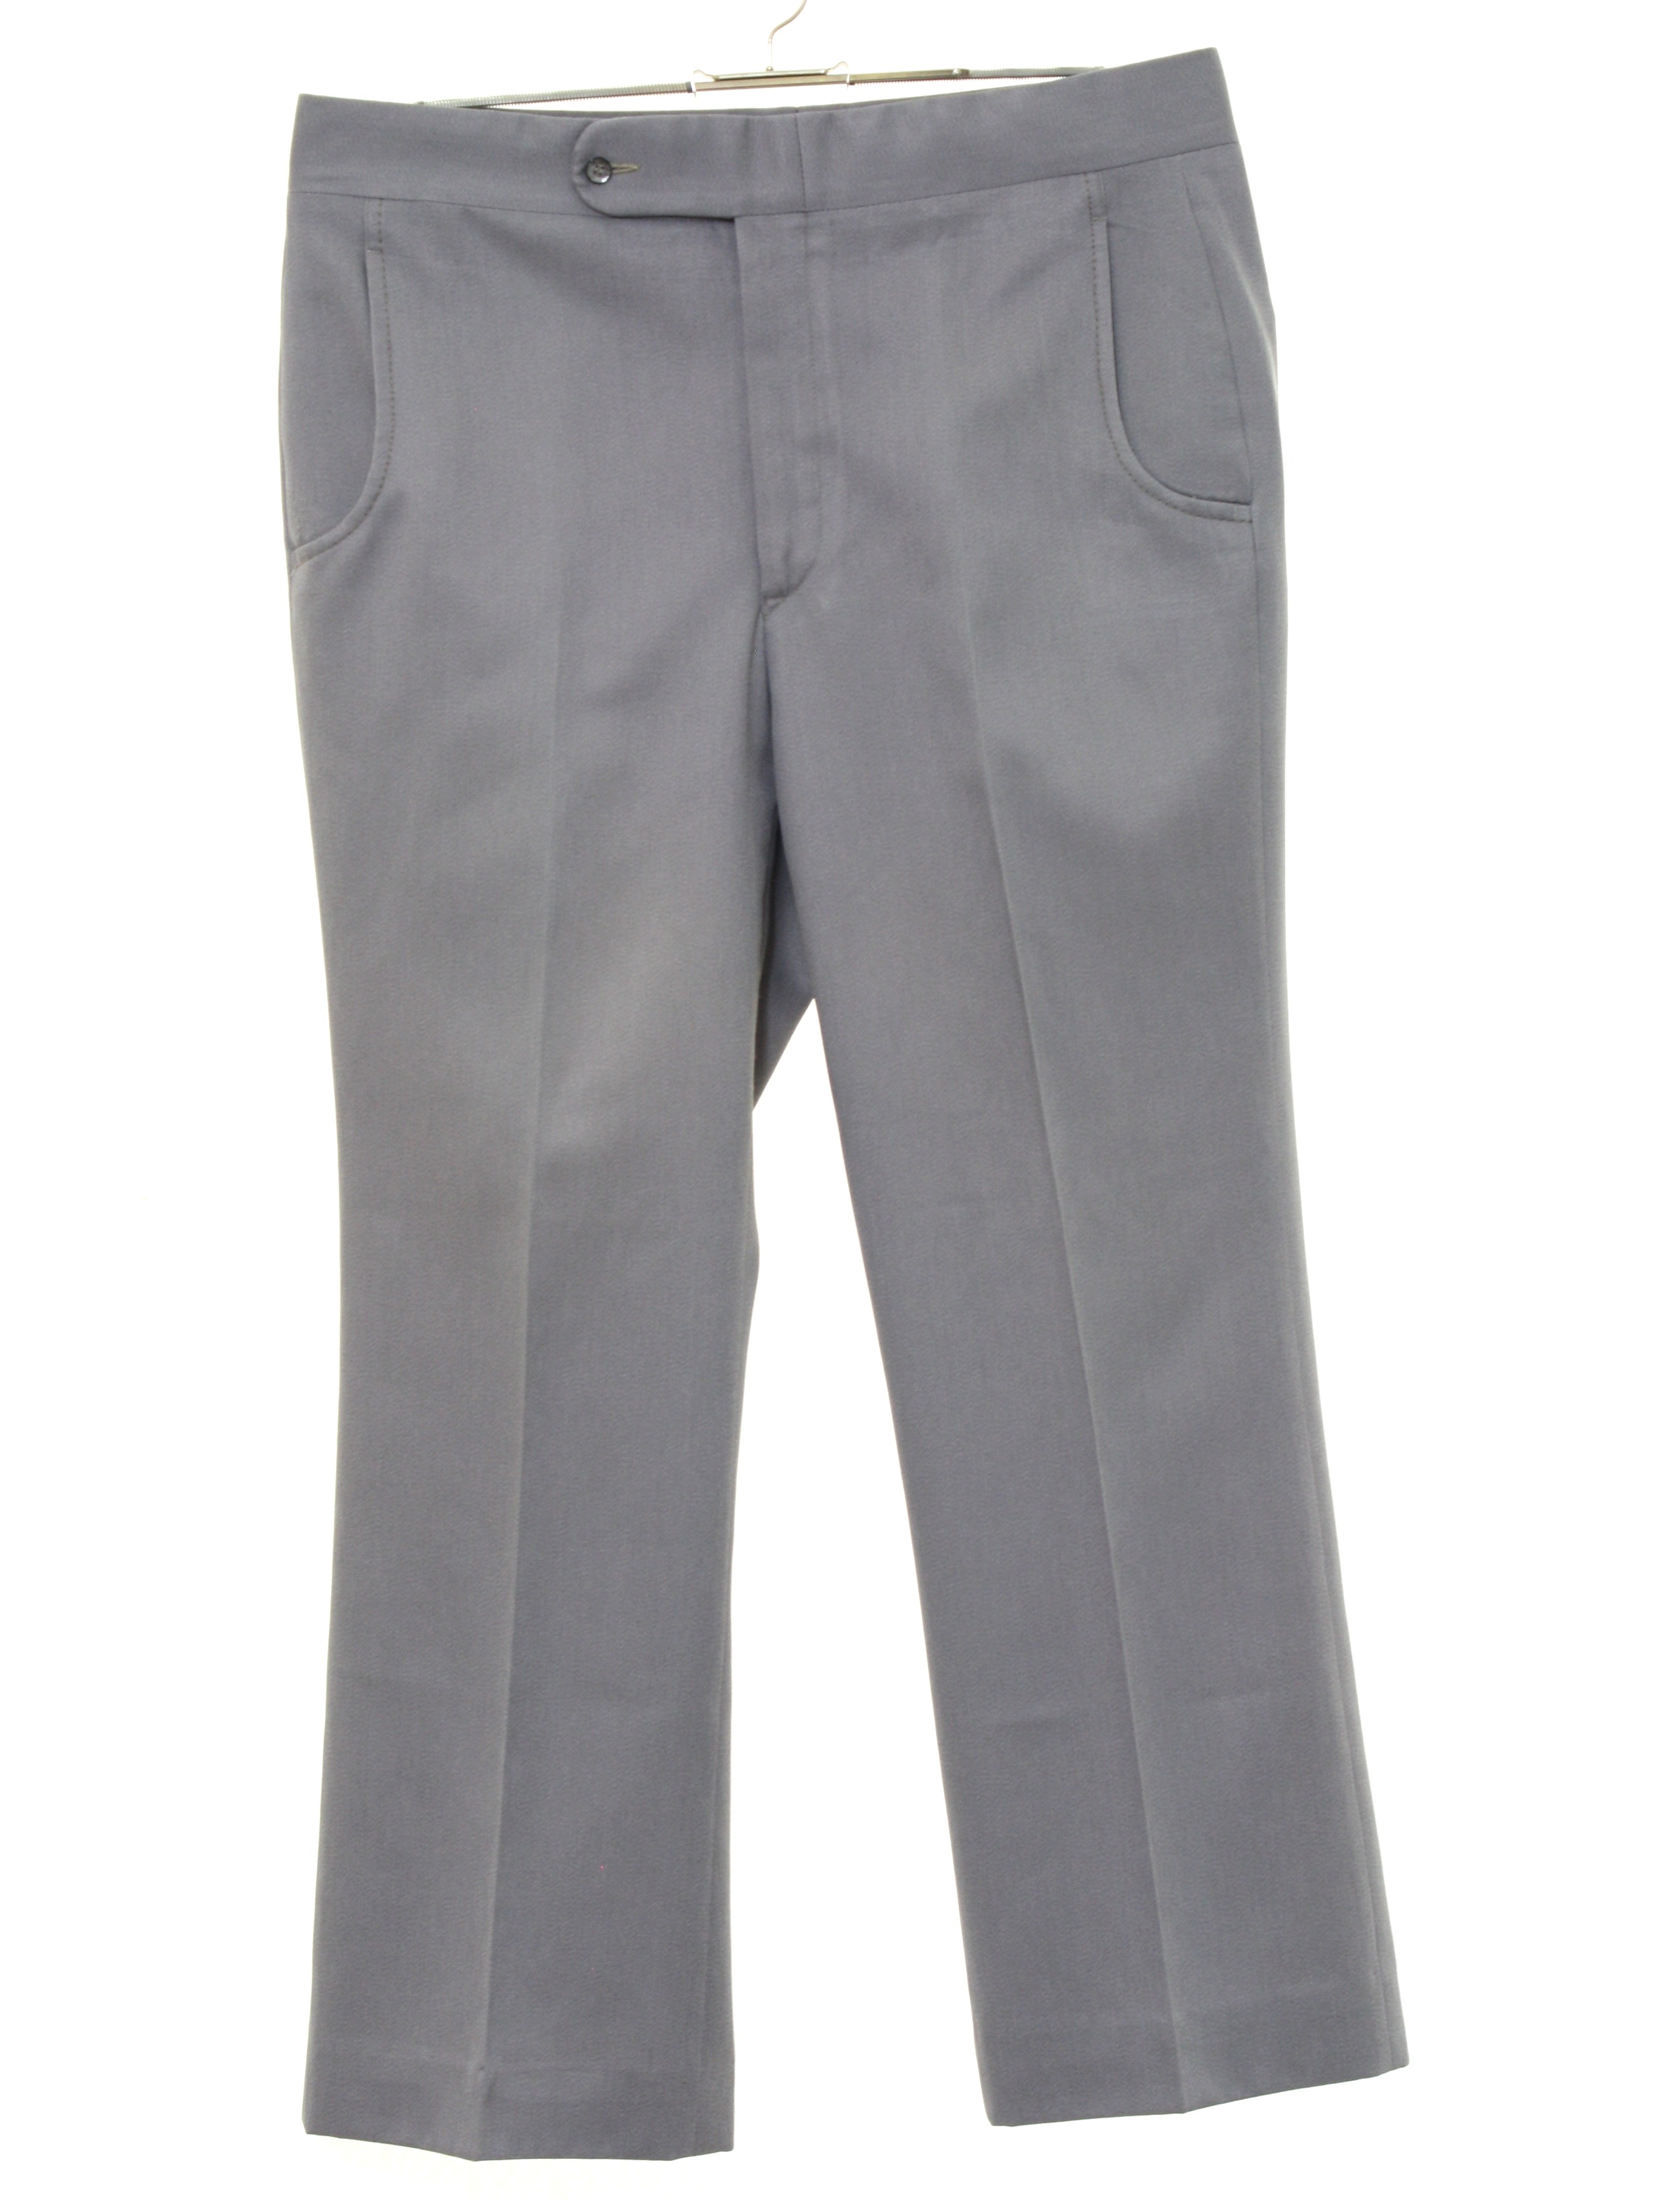 Vintage 1970's Flared Pants / Flares: 70s -No Label- Mens grey solid ...